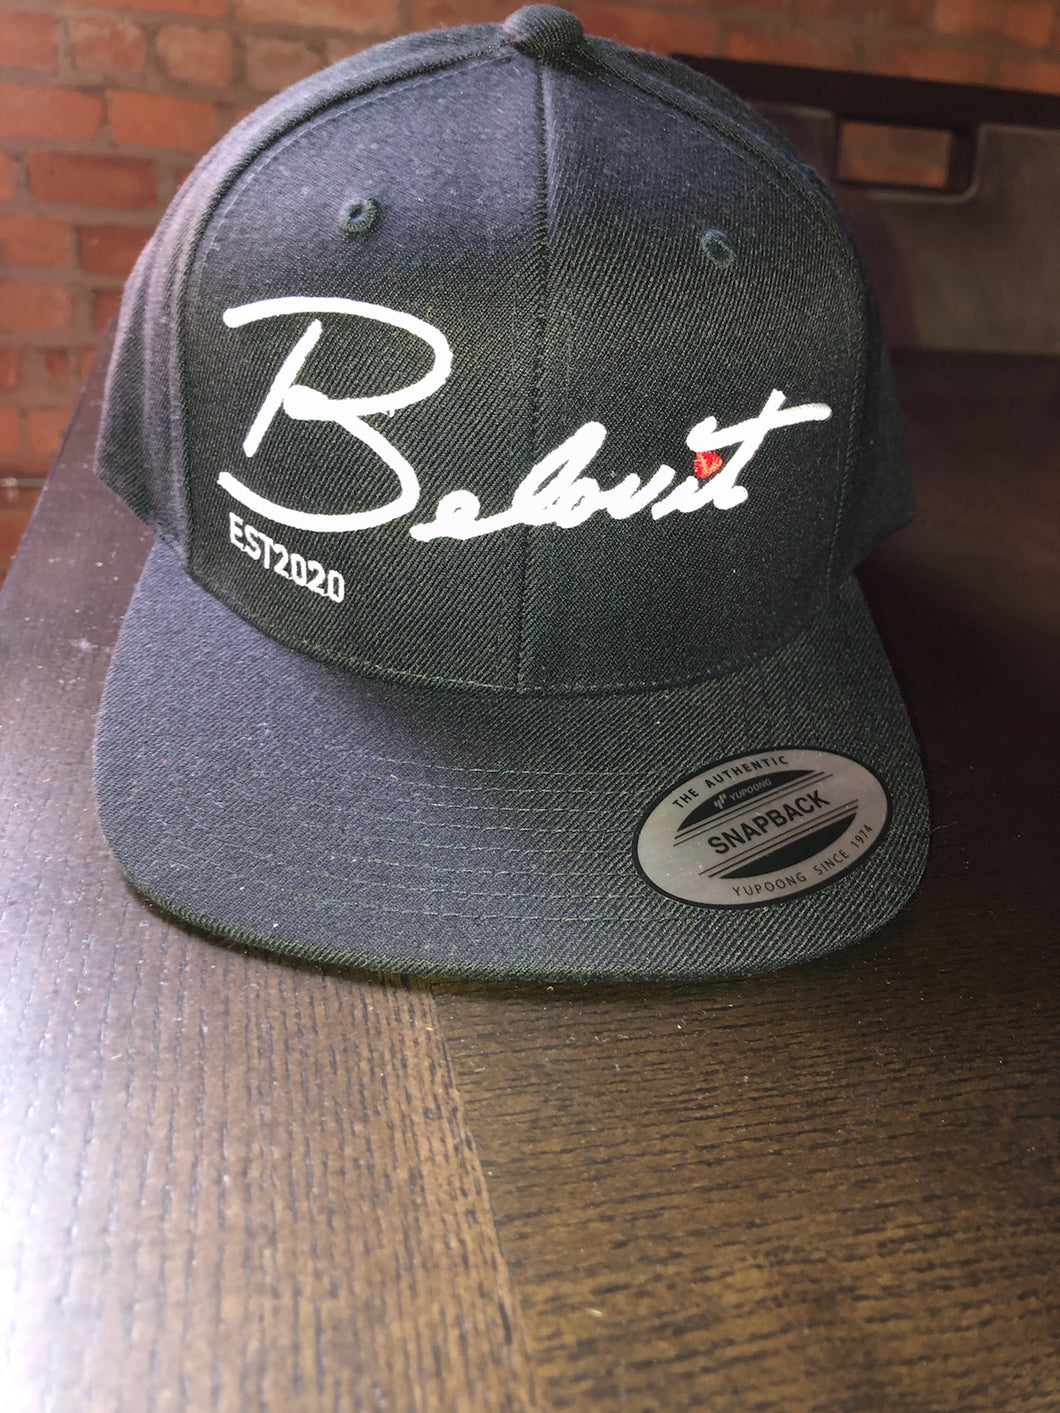 Belovit Black Cursive Baseball Cap